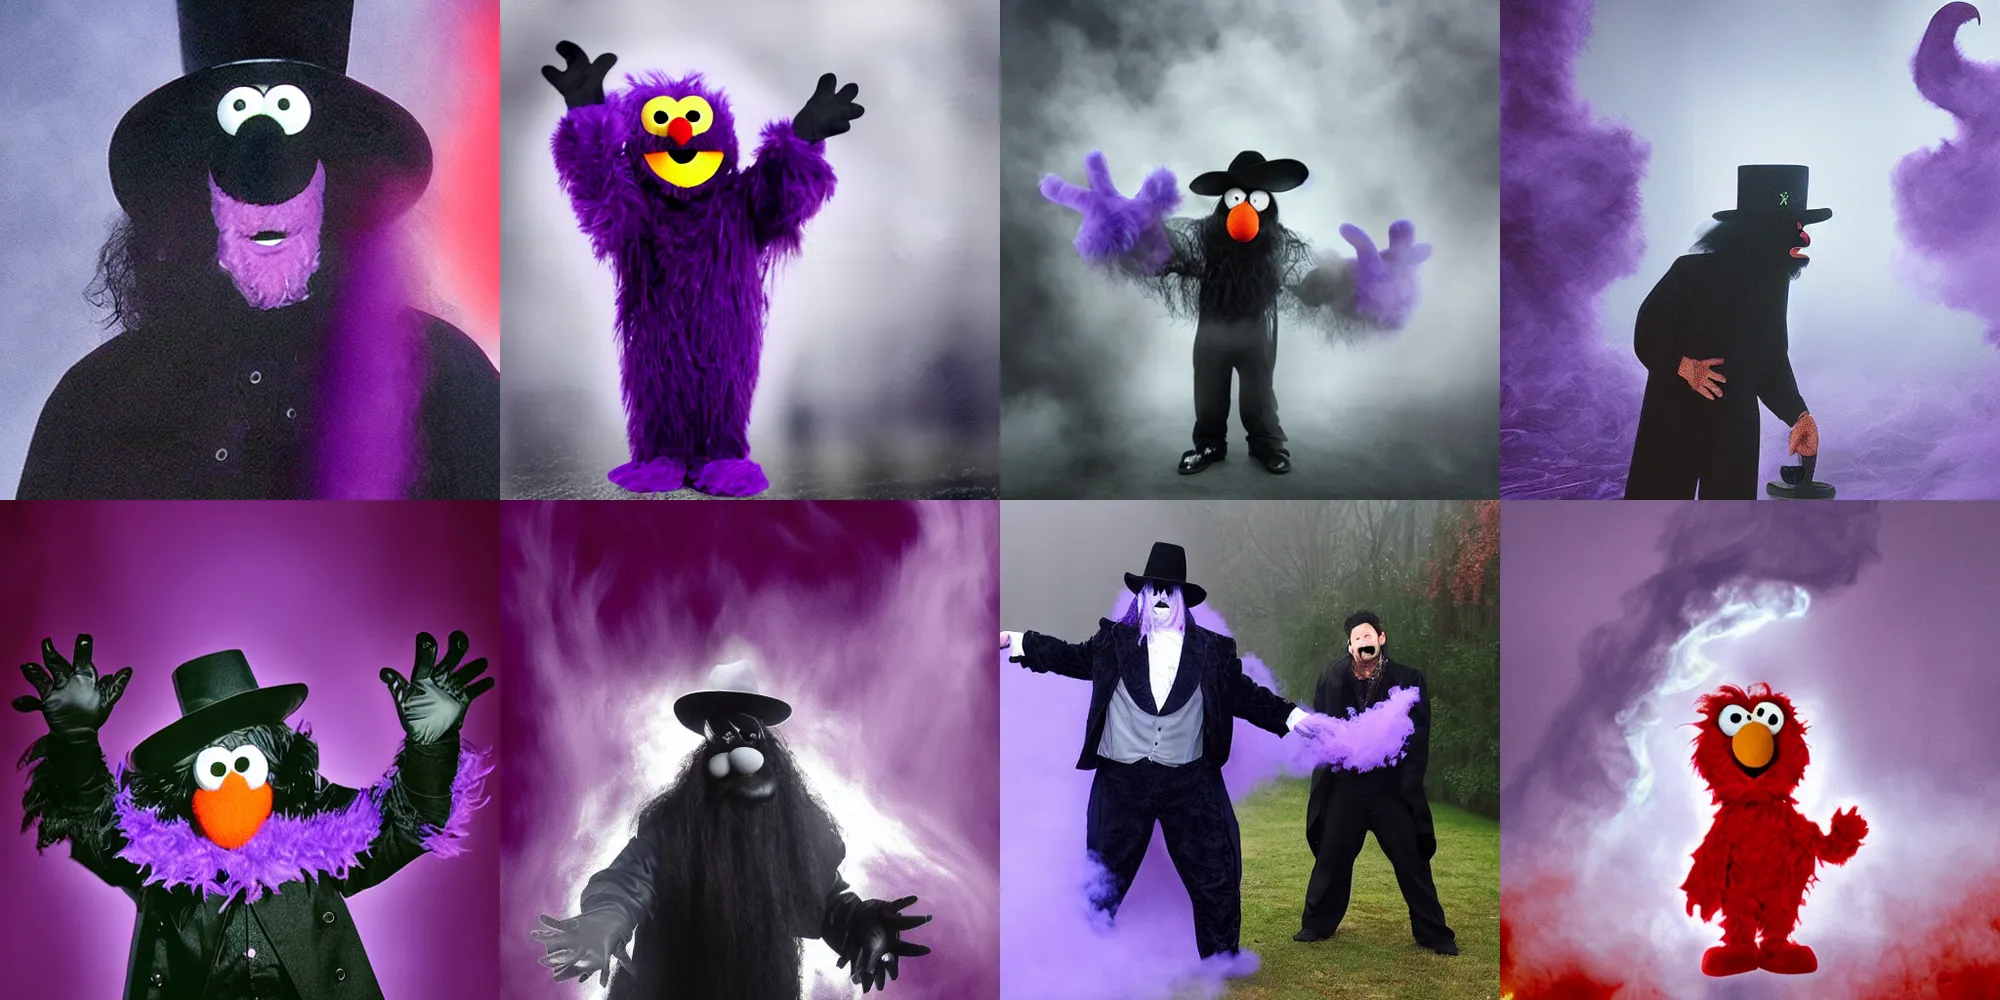 Prompt: Elmo dressed as The Undertaker, detailed, hyper realistic, billowing purple fog, atmospheric